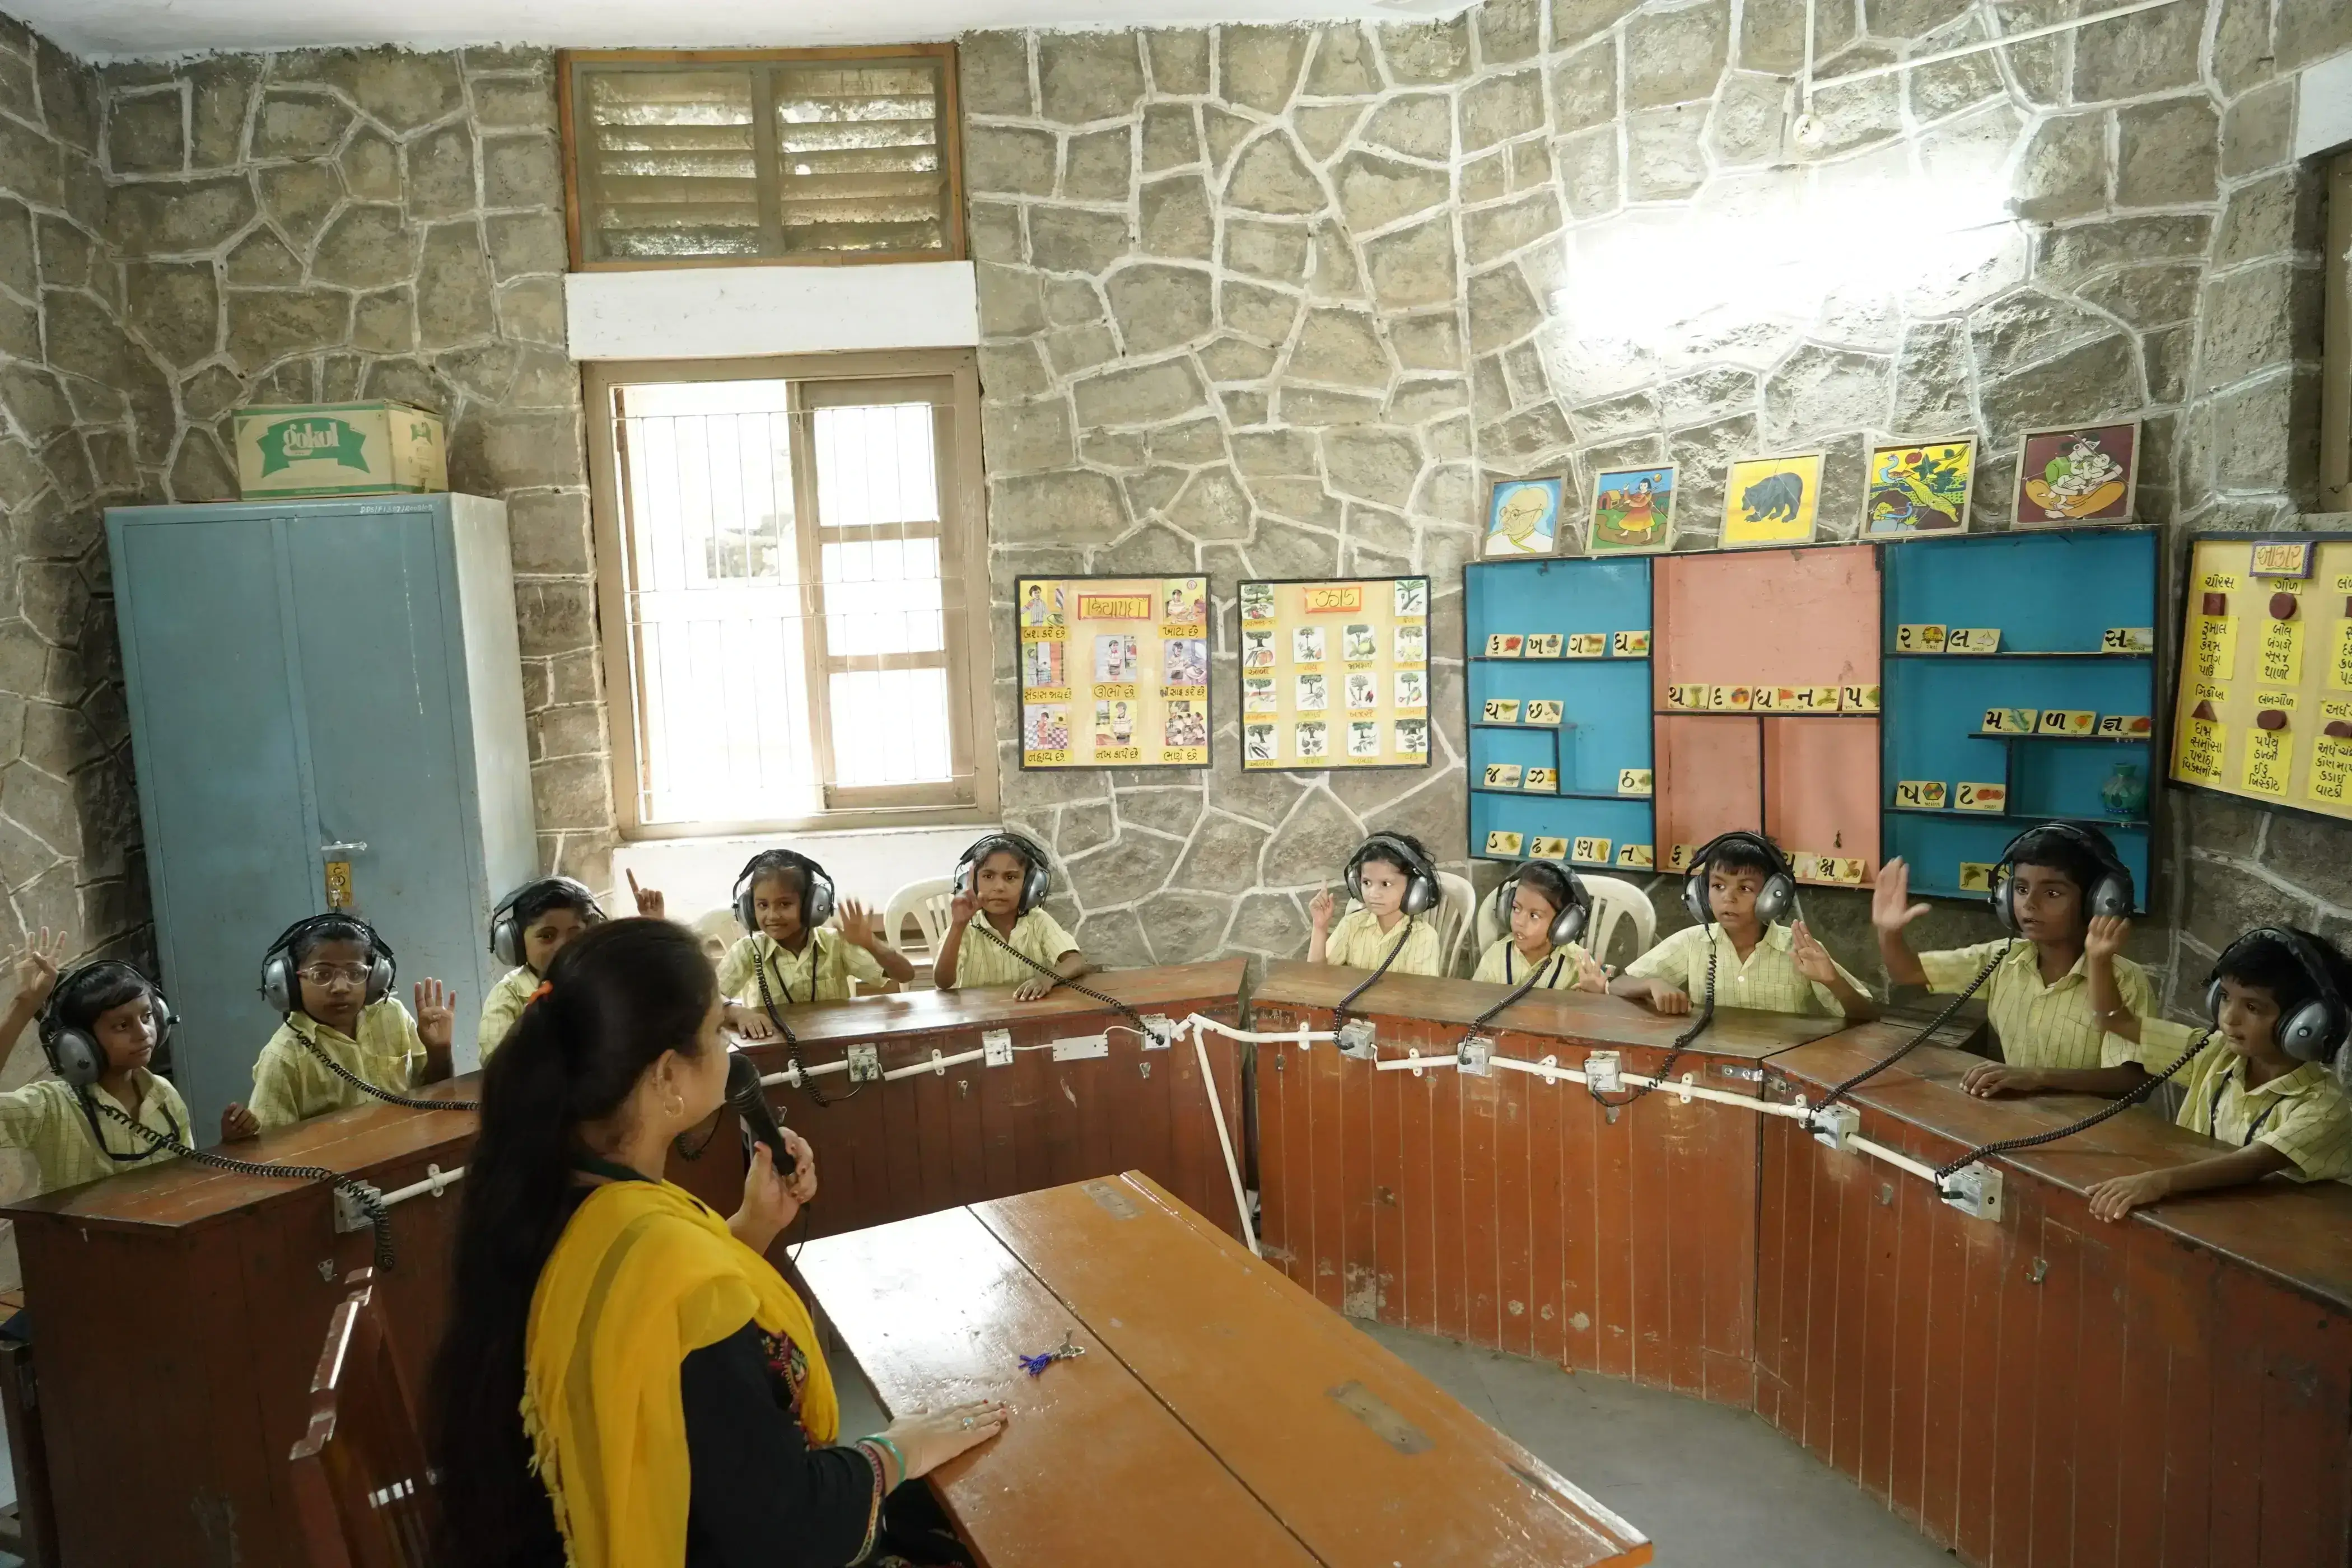 Activity 2 - Smt. Taraben Manilal Lallubhai Mehta Speech Therapy Centre - Vidyamandir Trust, Palanpur